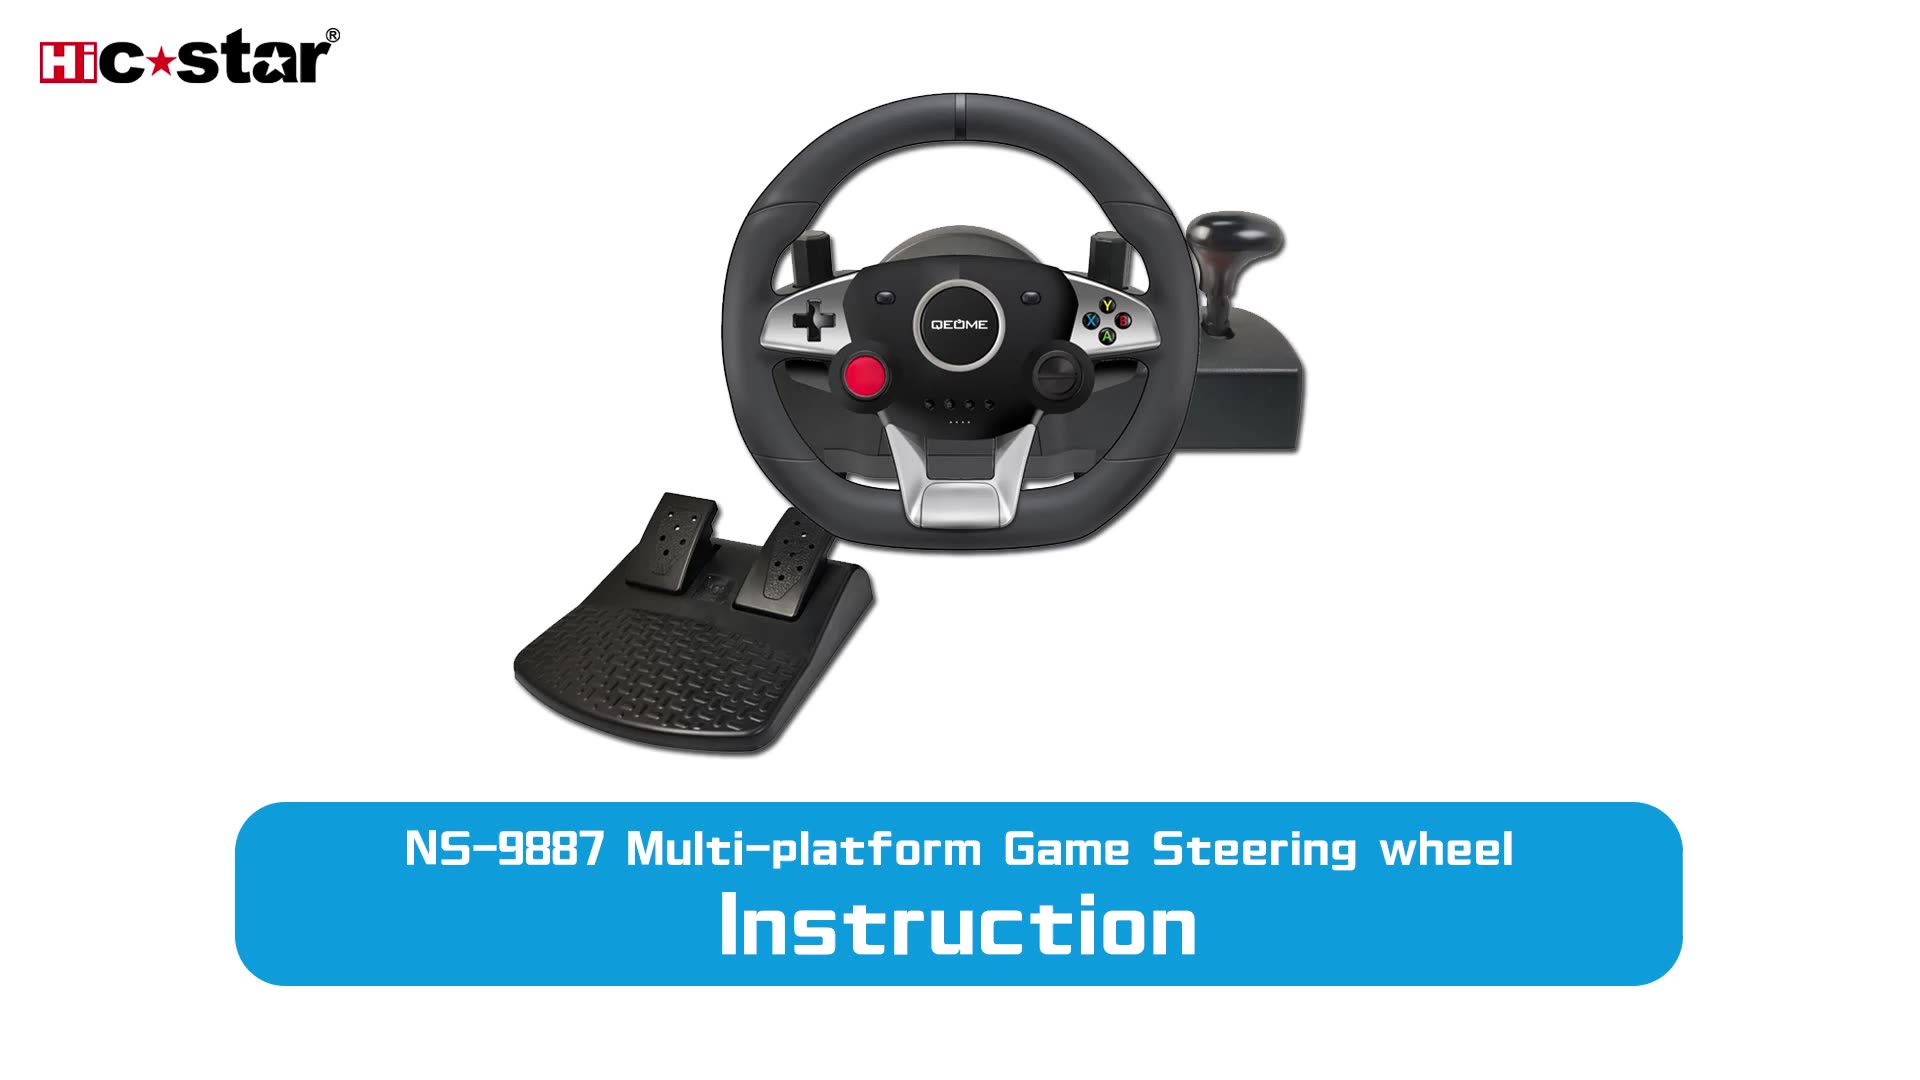 Manual transmission steering wheel support gta 5 фото 33